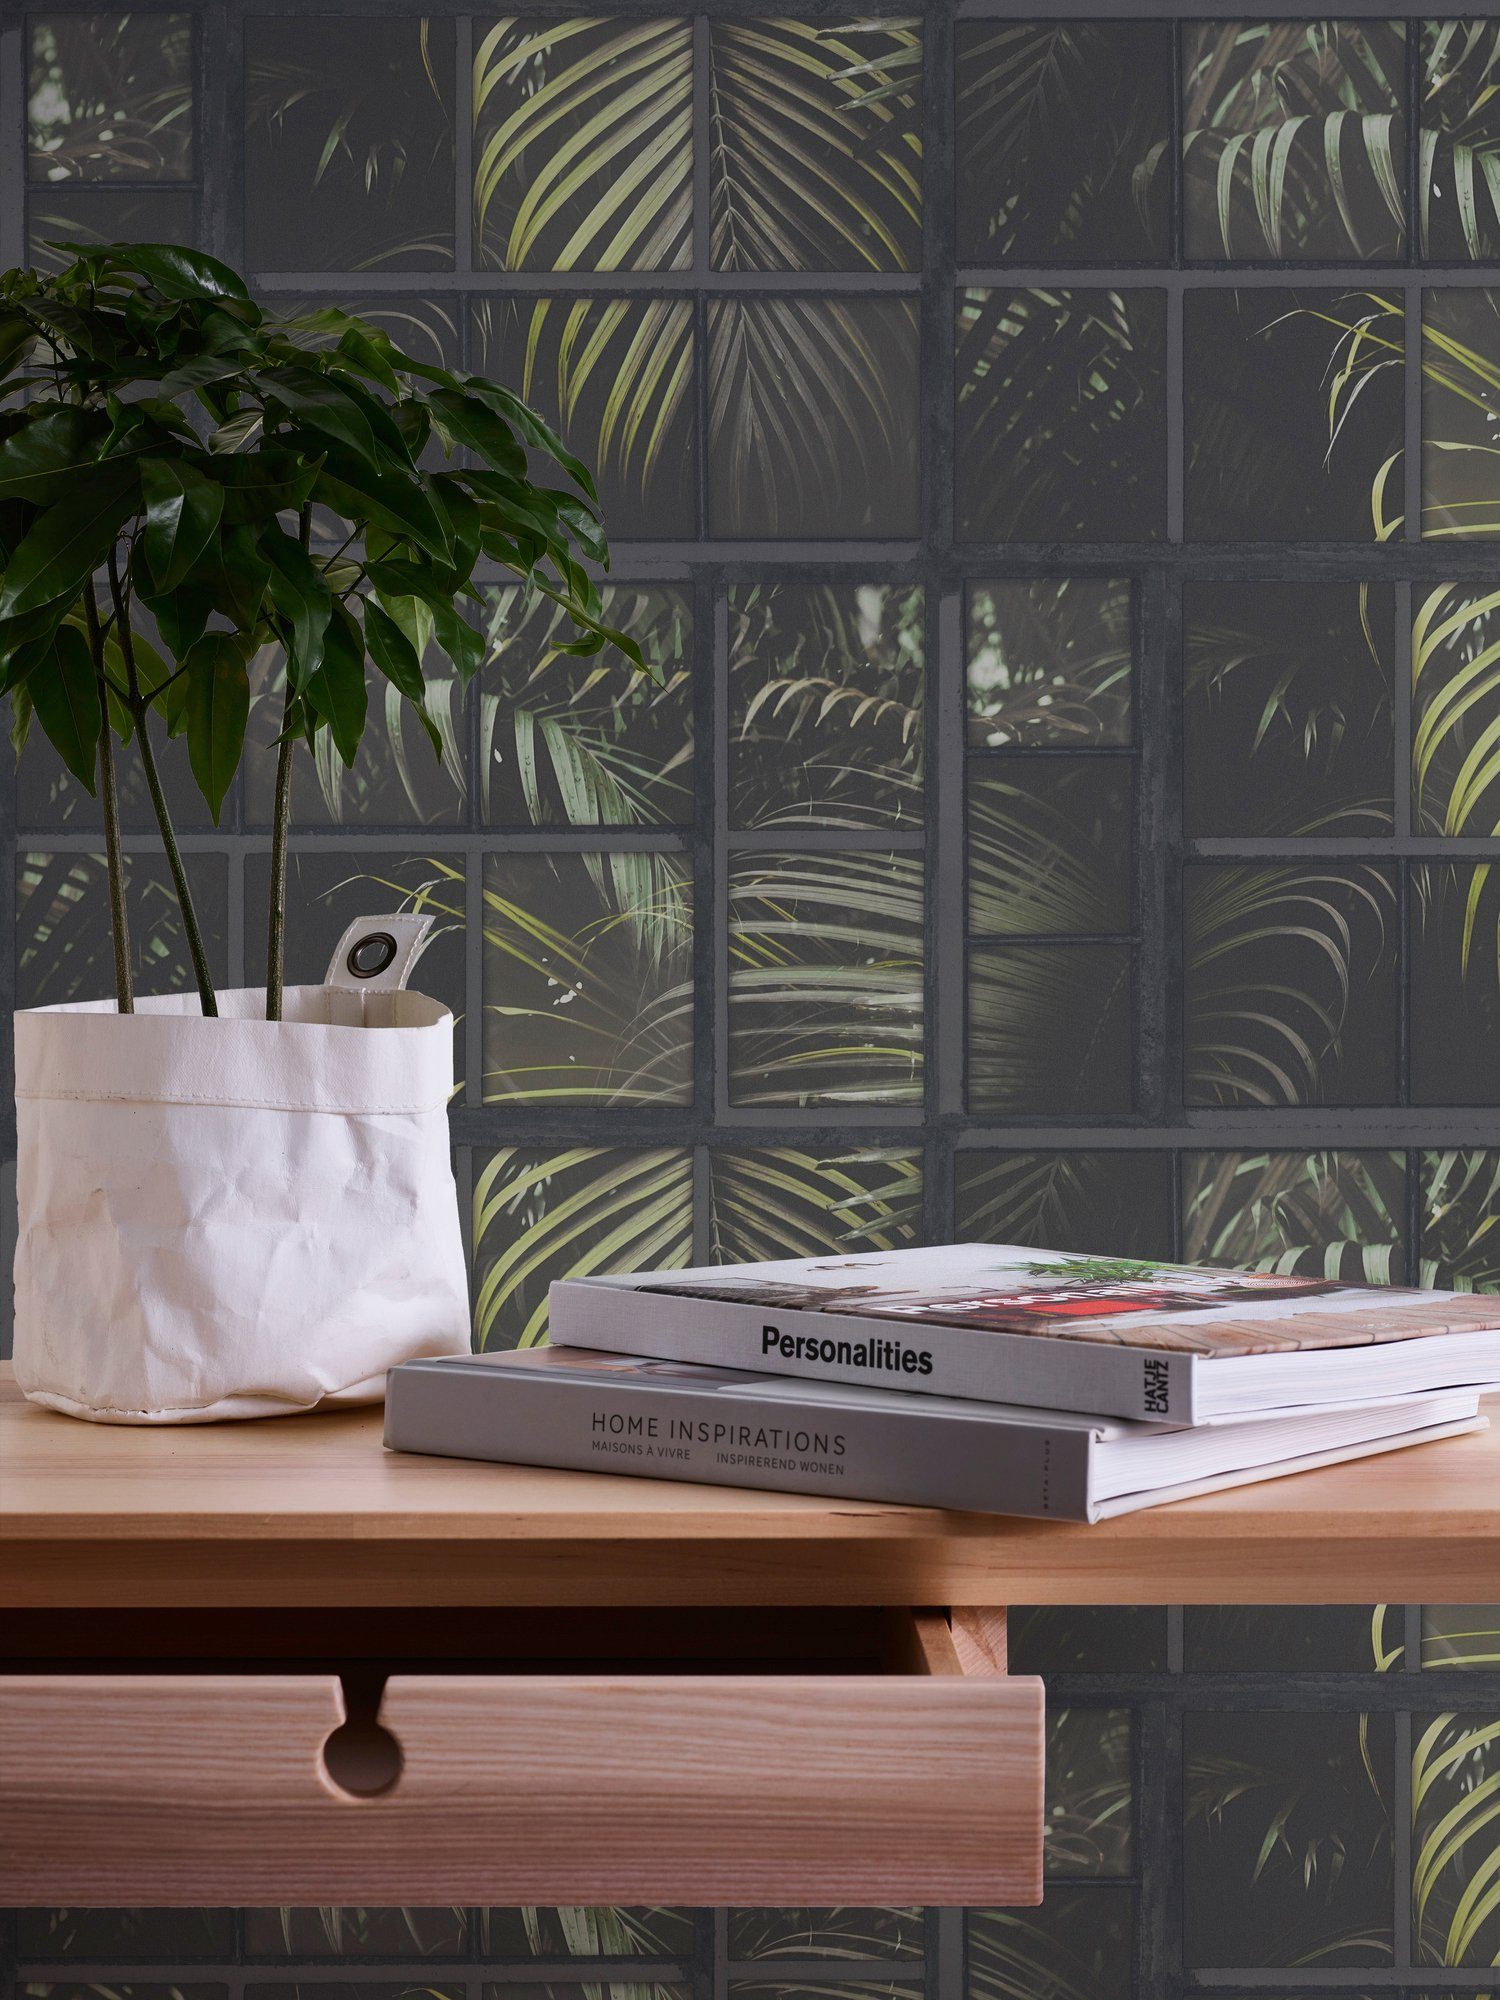 Palmen Dschungeltapete Industrial, schwarz/graugrün floral, Vliestapete botanisch, walls A.S. living Création Tapete